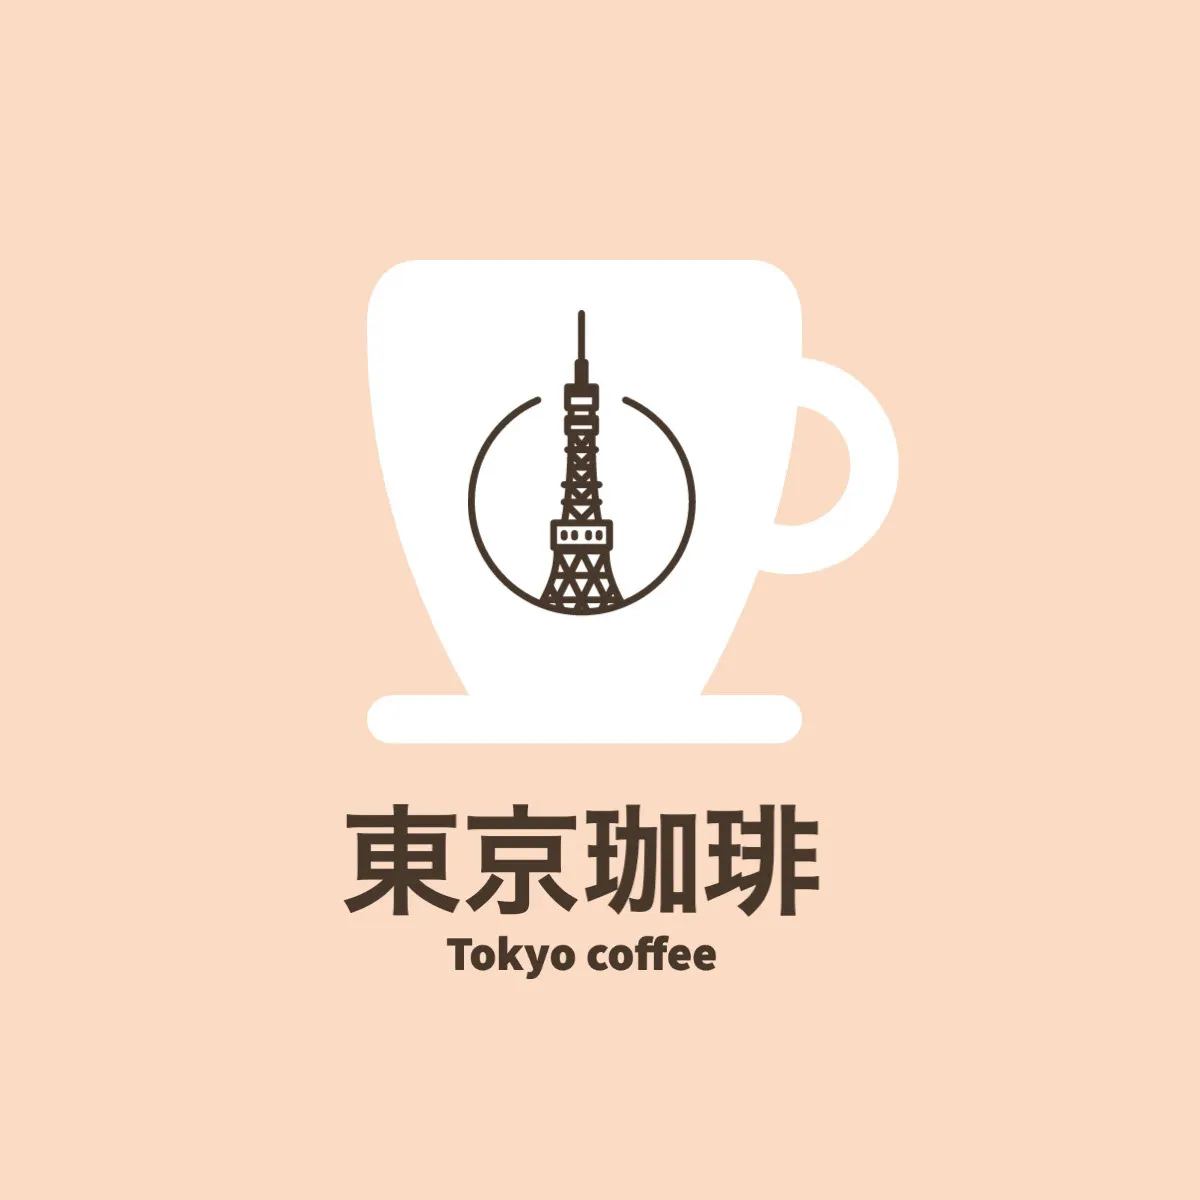 Tokyo coffee logo